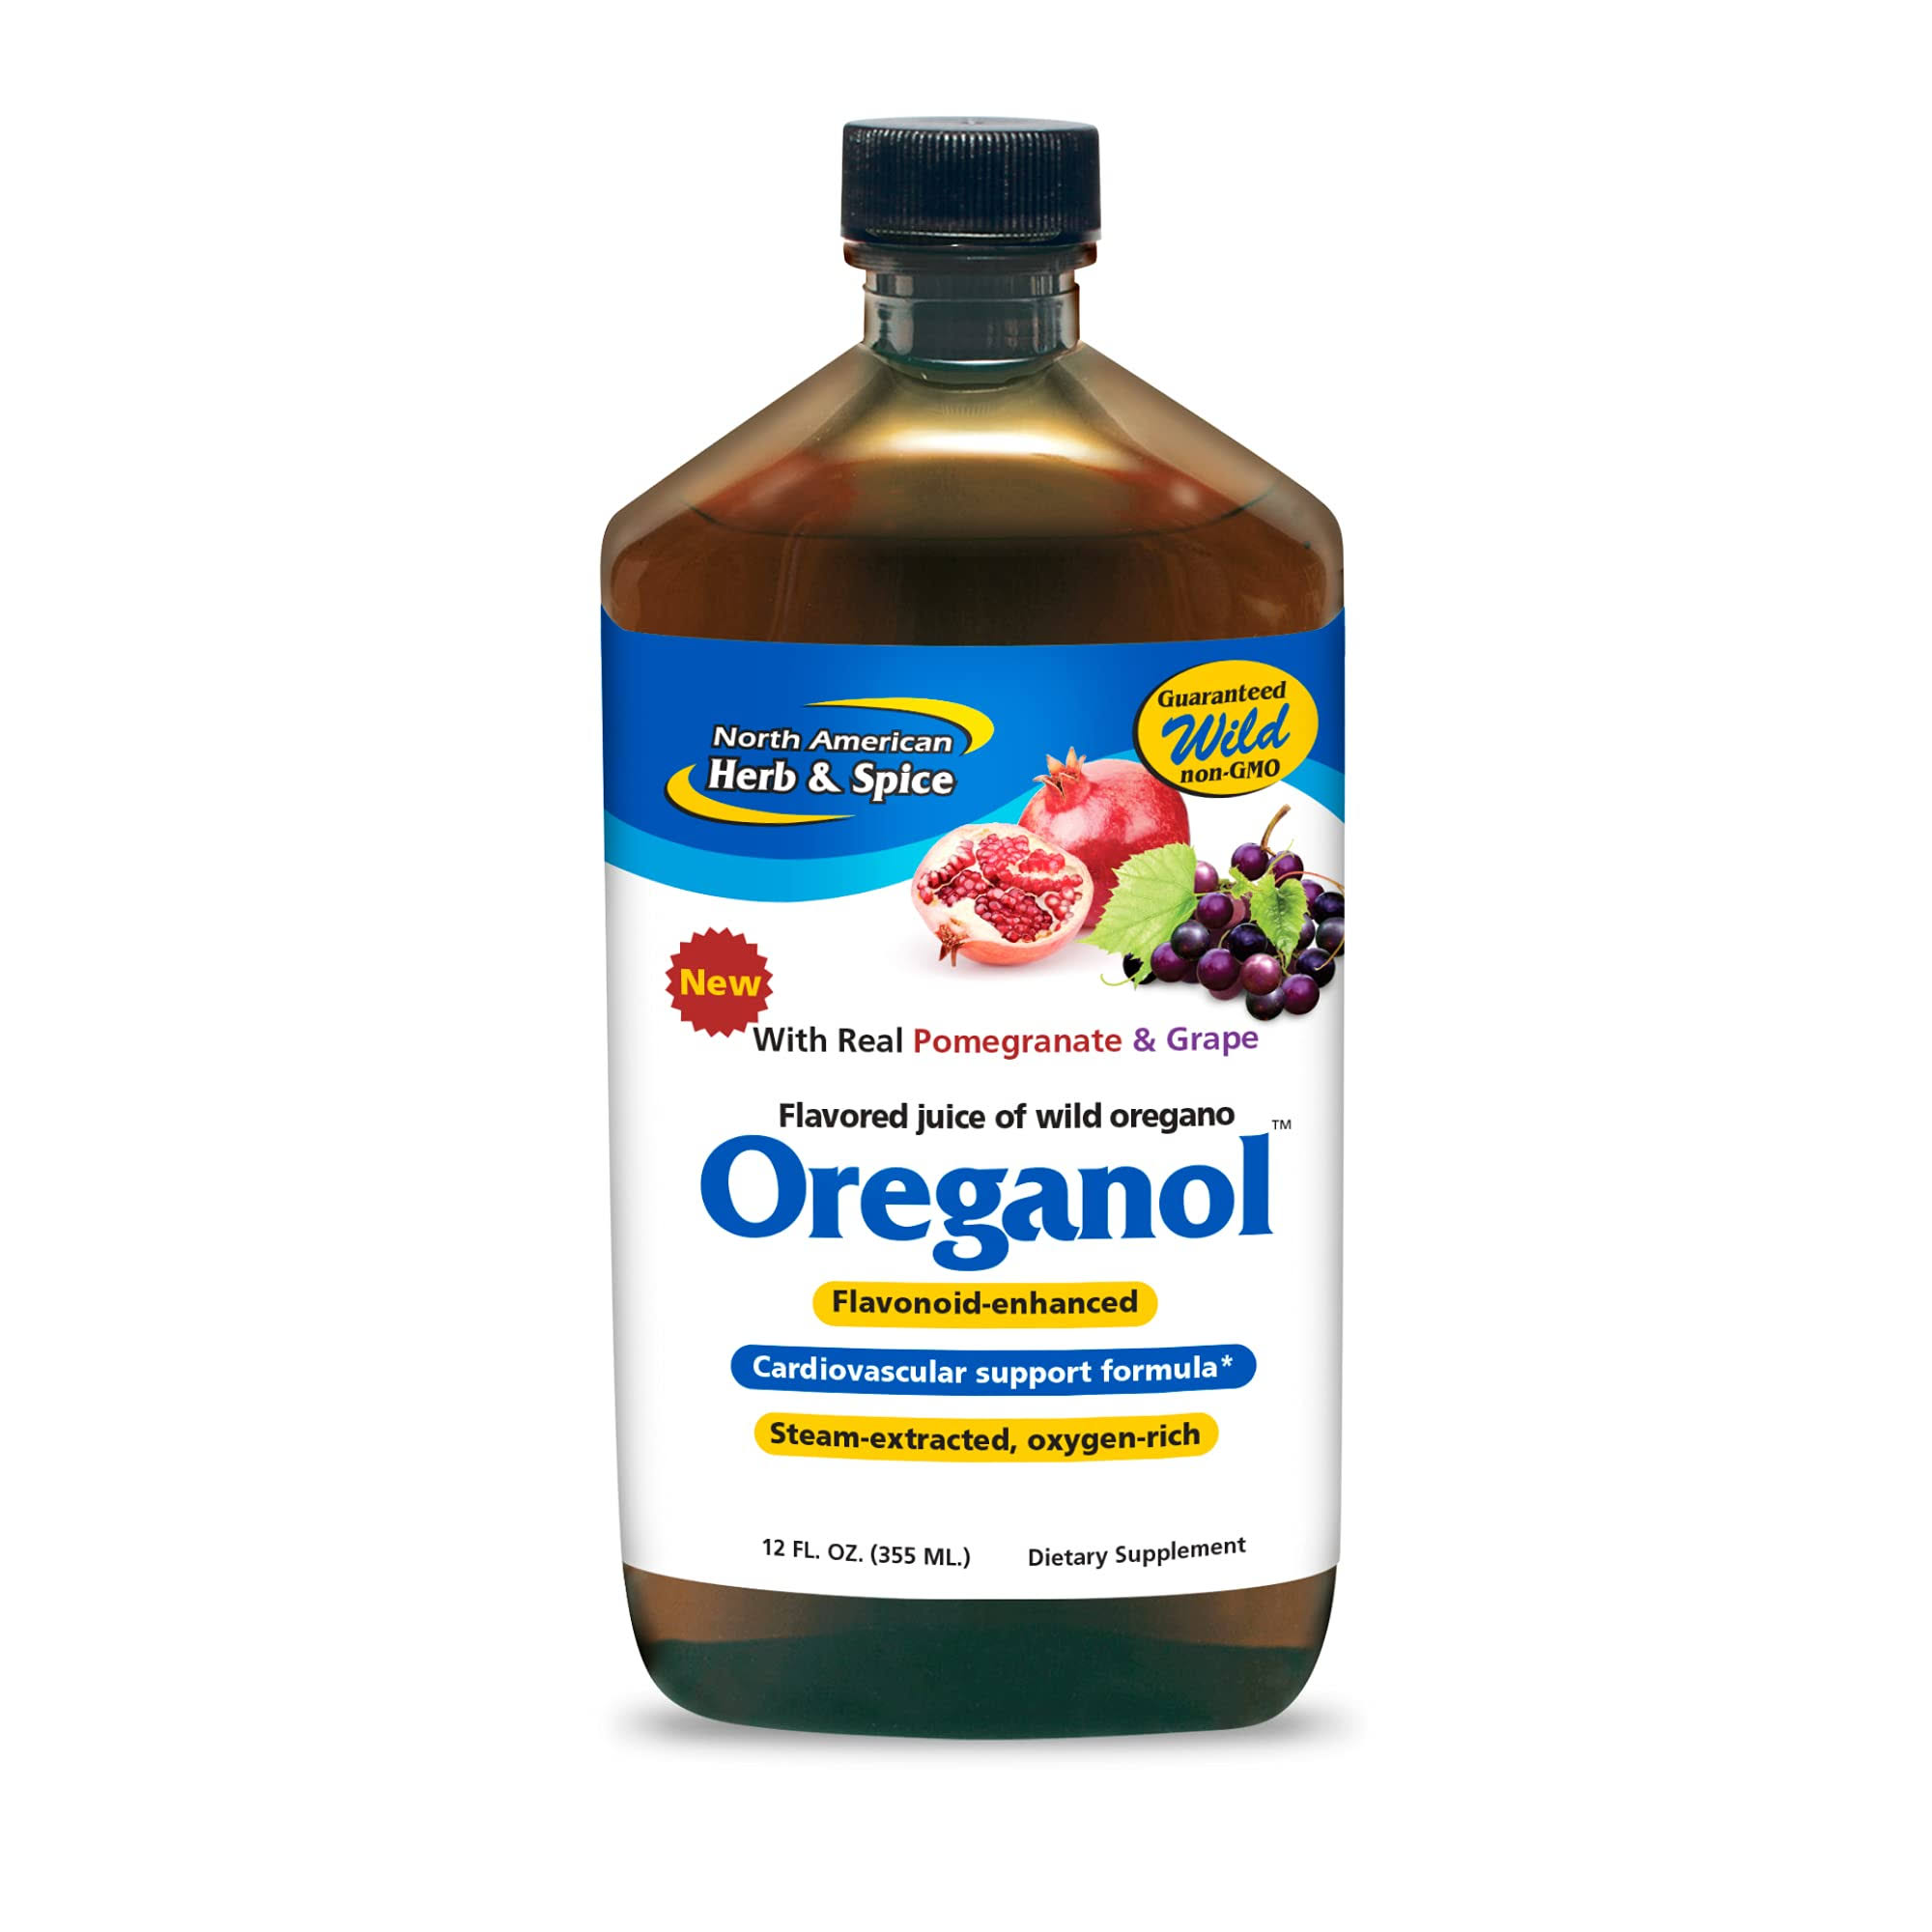 North American Herb & Spice Oreganol Juice with Real Pomegranate & Grape - 12 fl oz.